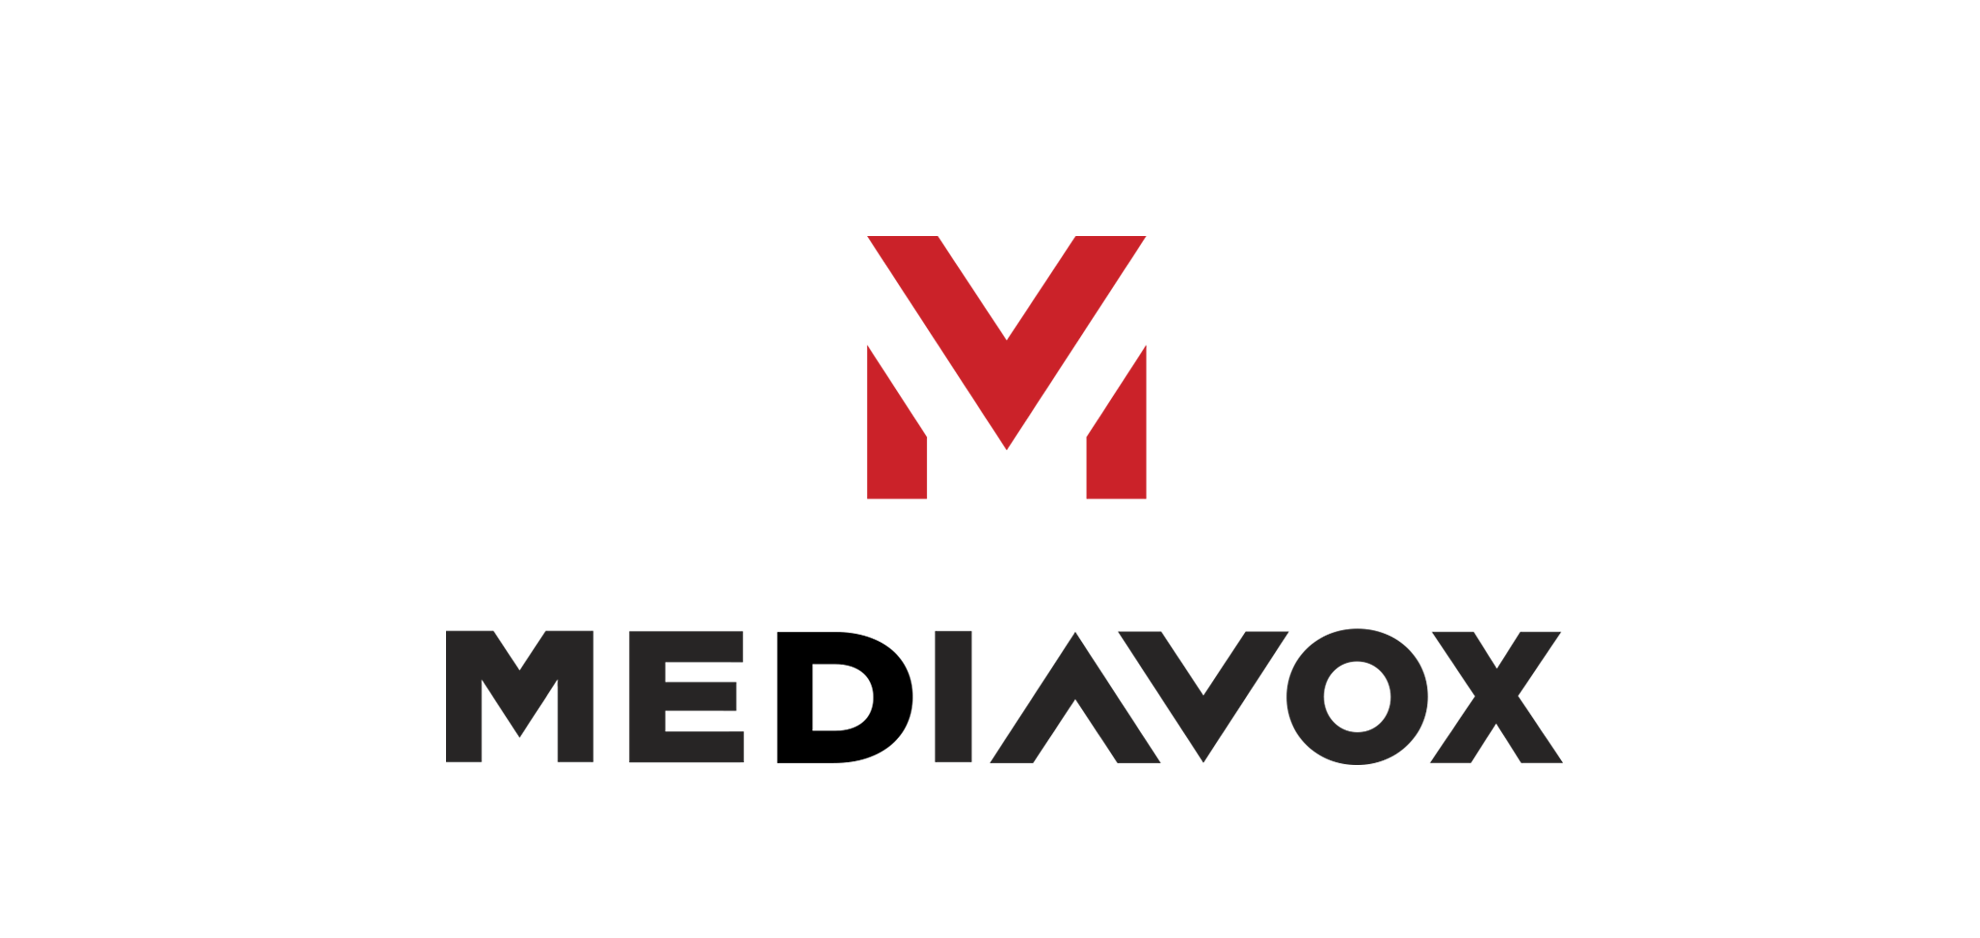 MEdiavox